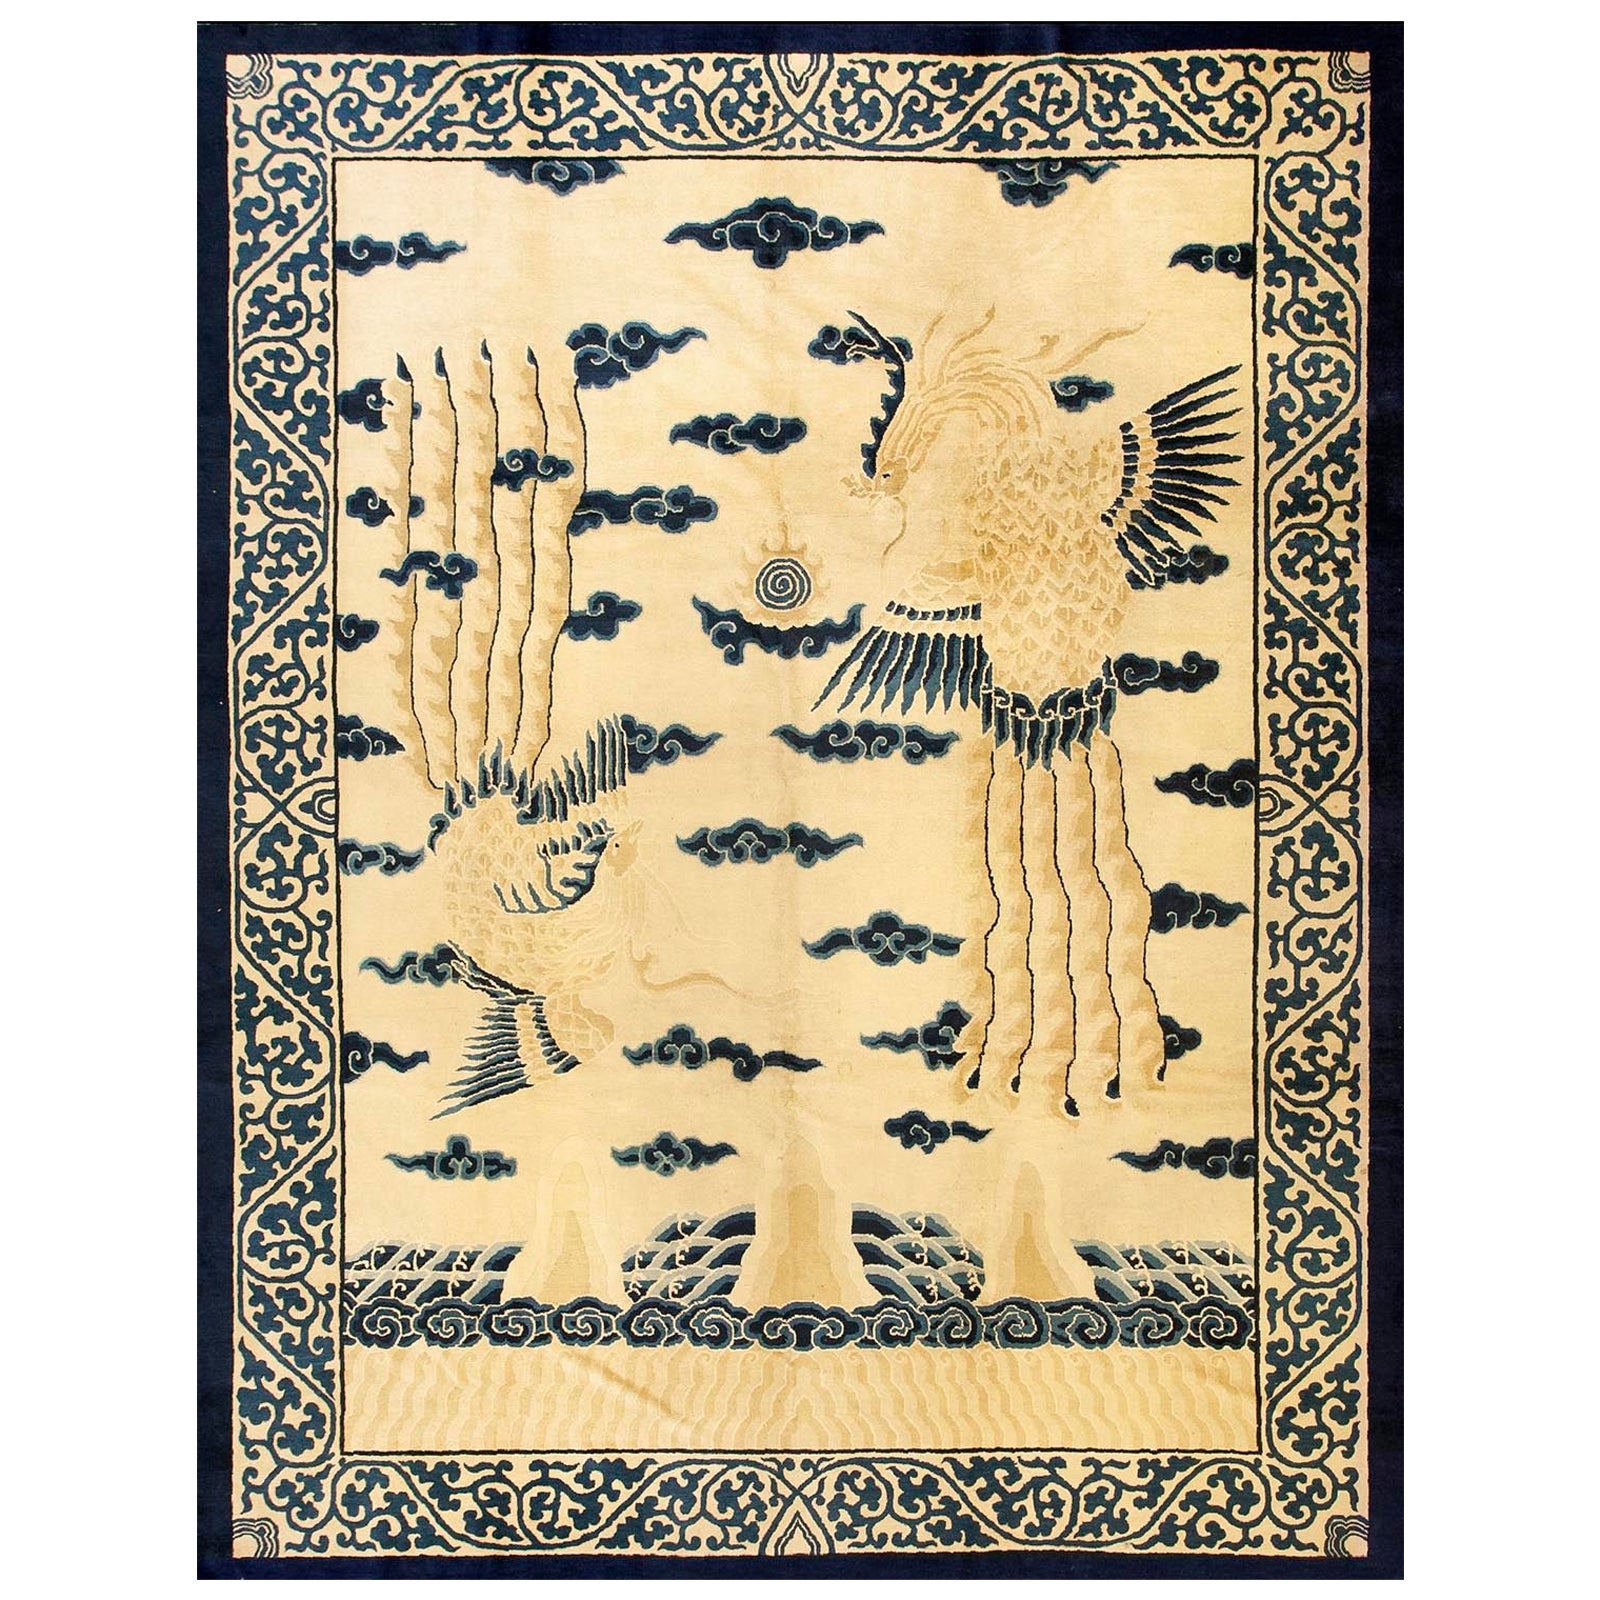 Late 19th Century Chinese Peking Carpet ( 9' x 11'5" - 275 x 348 cm )